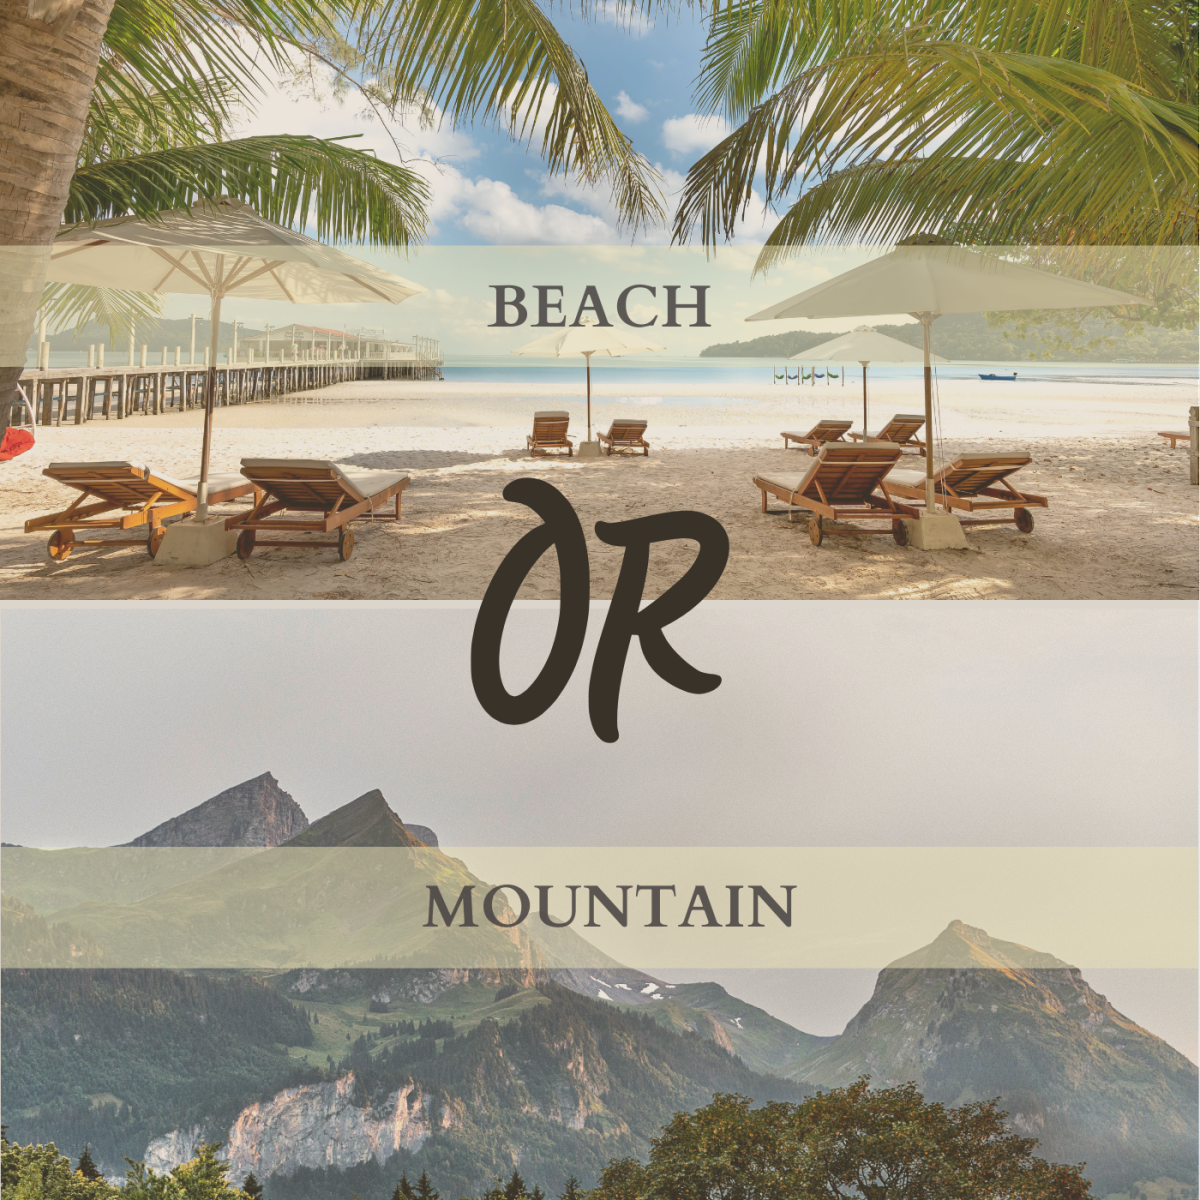 Beach or mountain?